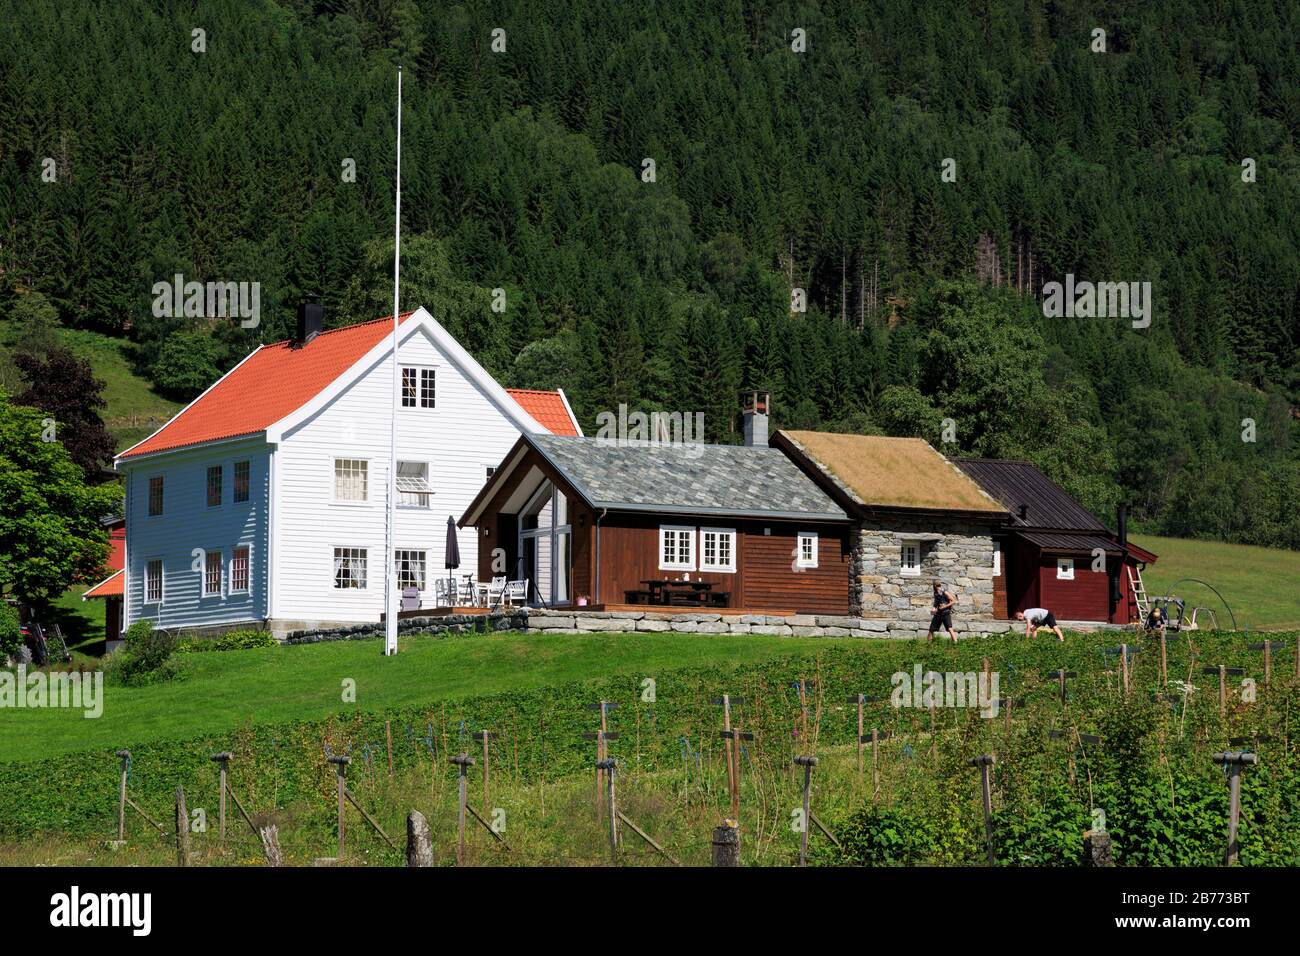 Hague Farm, Skjolden Village, Sognefjord, Sogn og Fjordane County, Norway Stock Photo